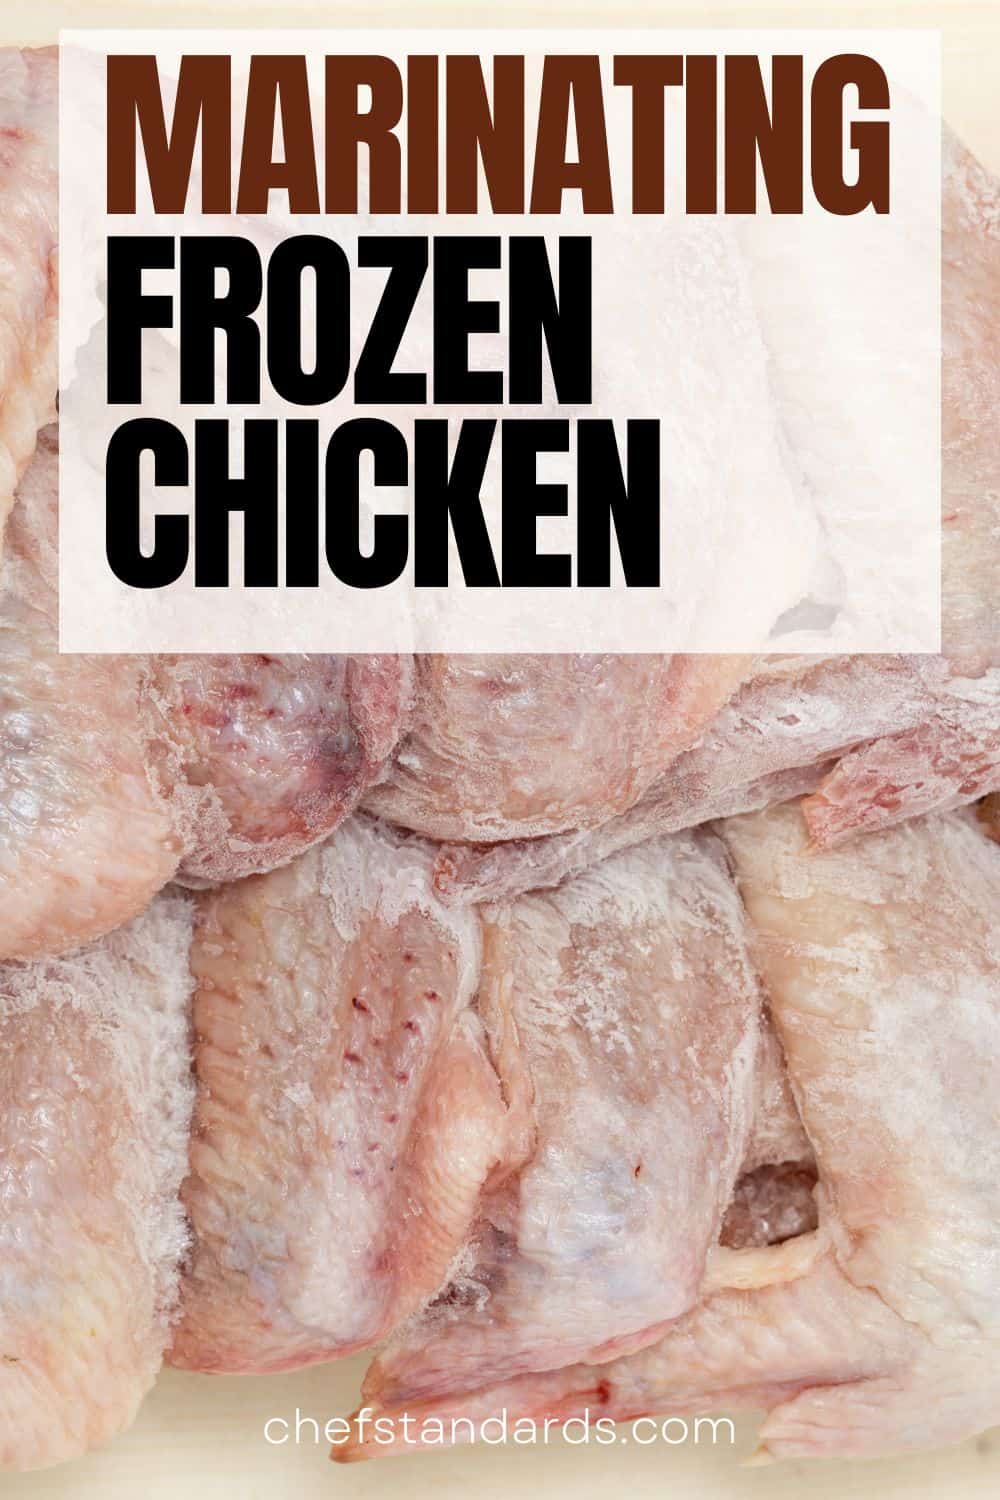 Can You Marinate Frozen Chicken A Double-Edge Sword
